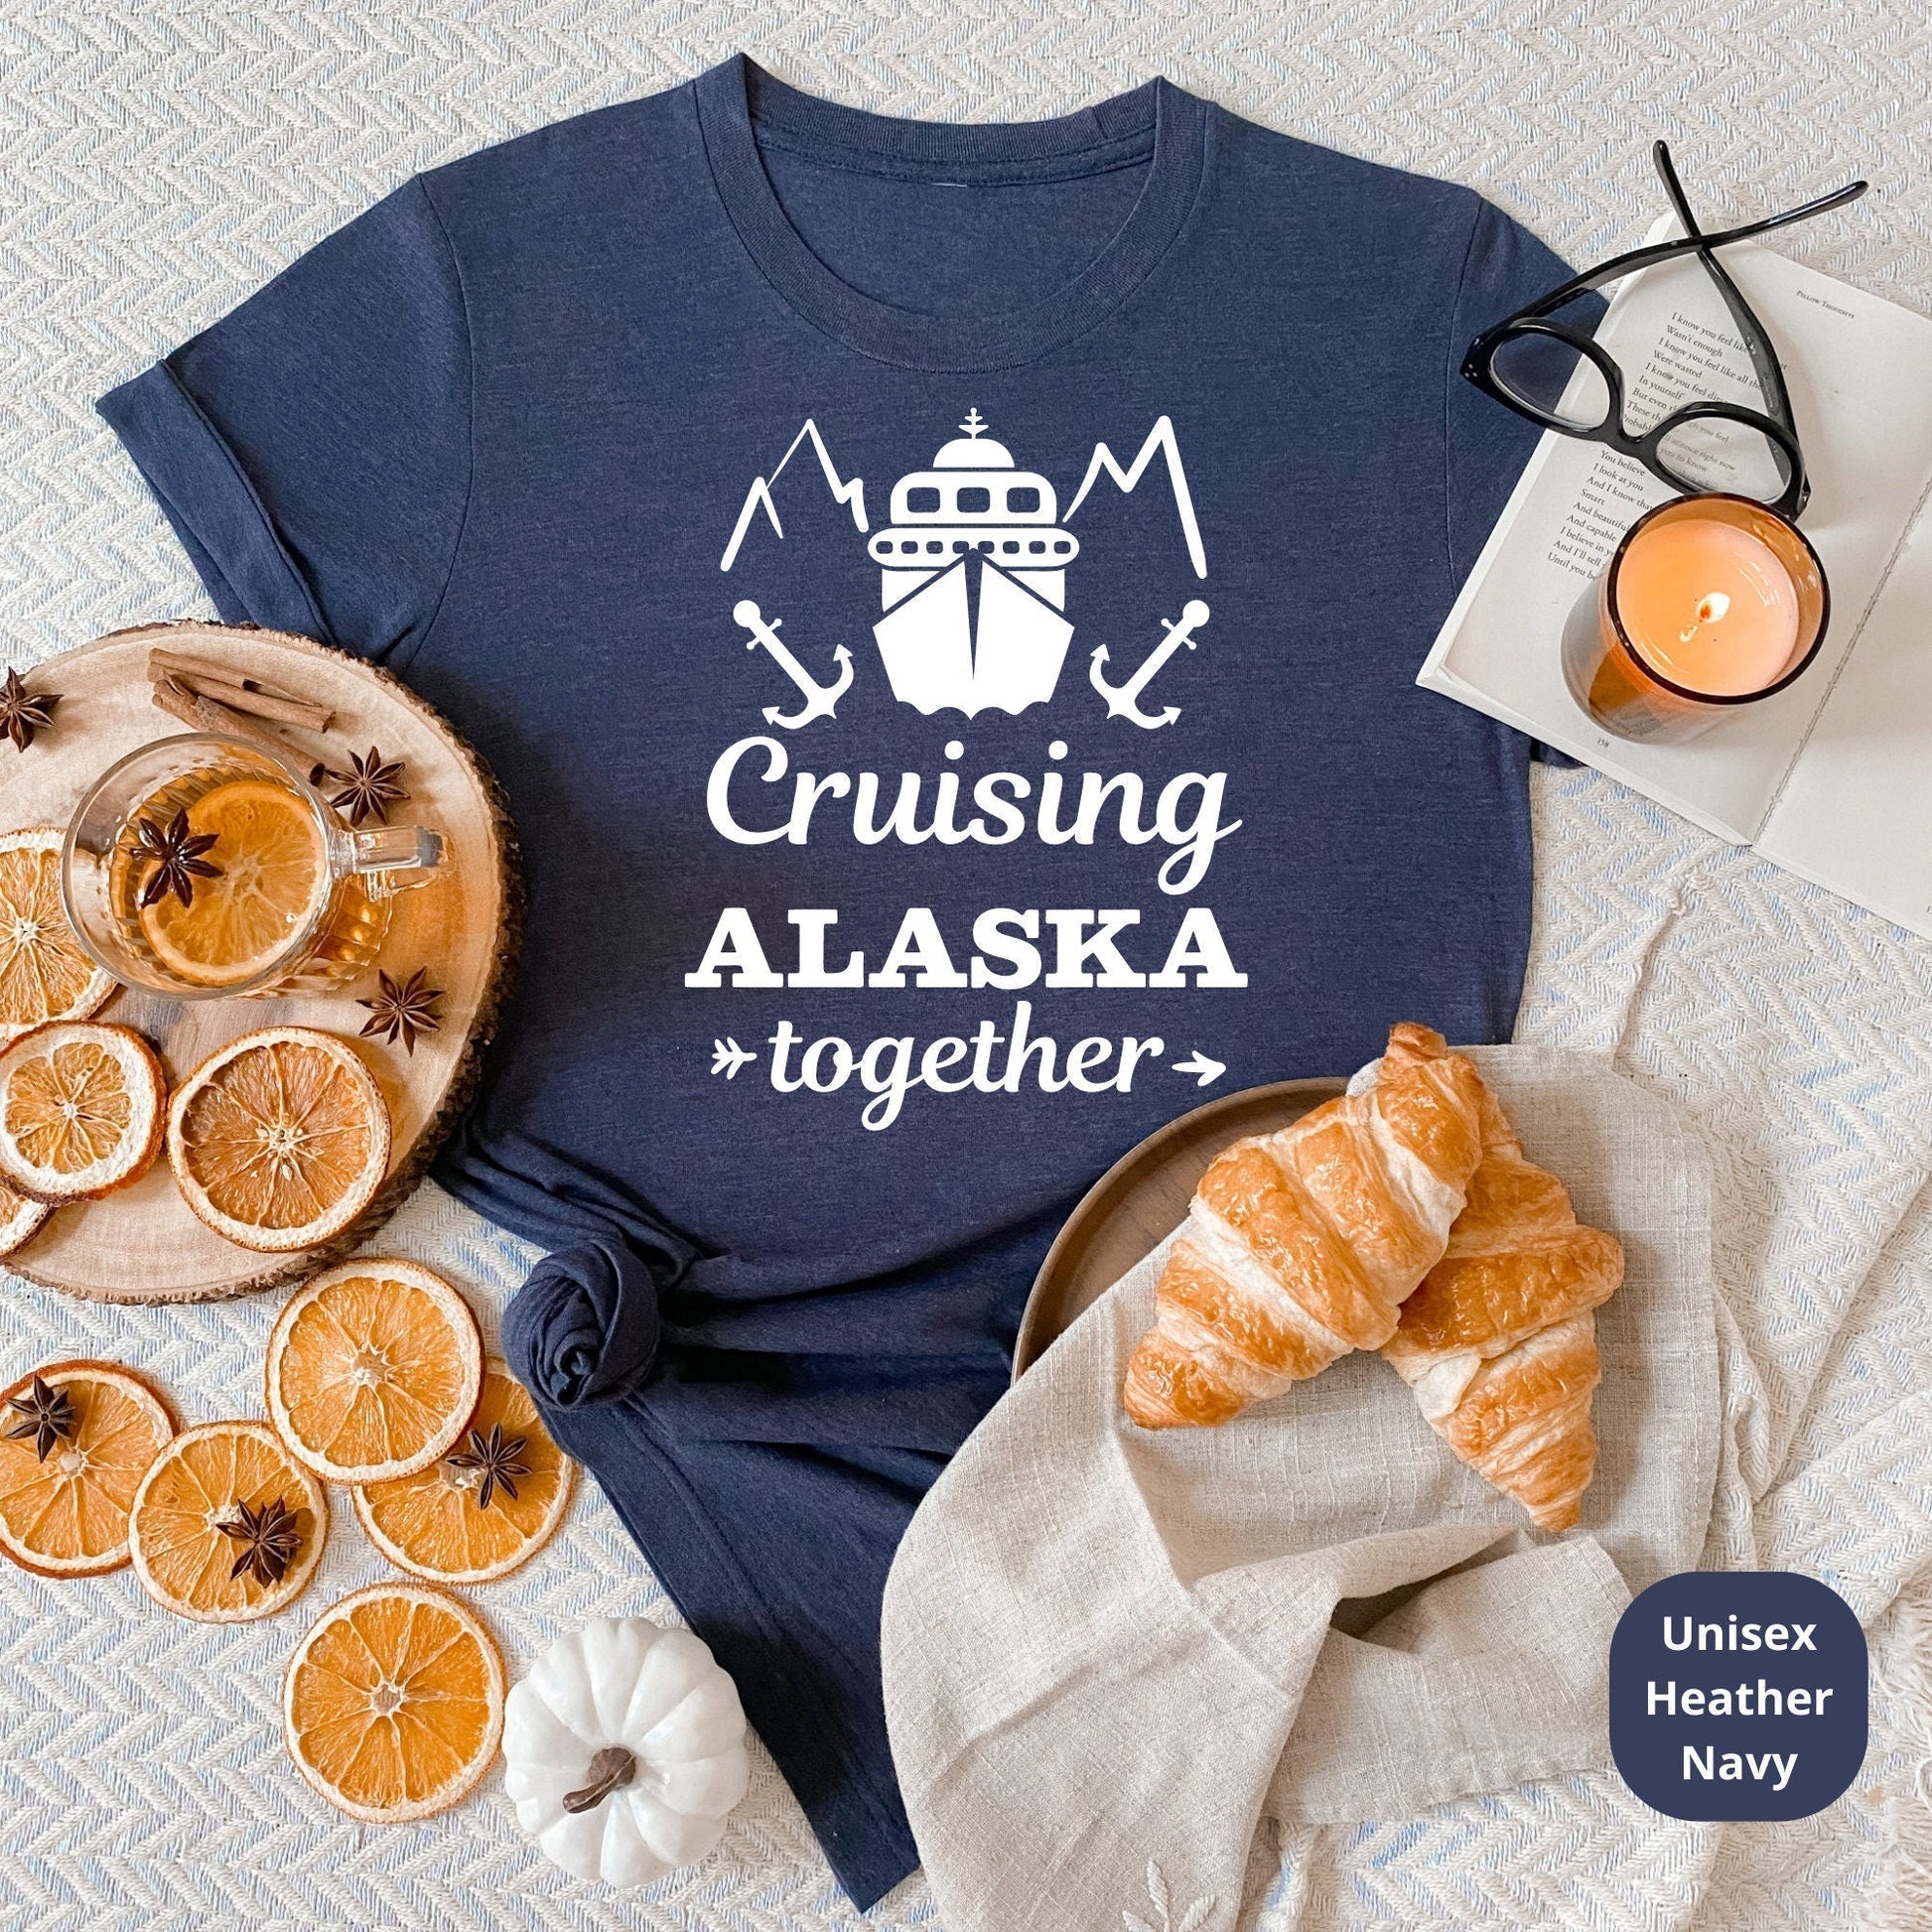 Alaskan Cruise Shirts HMDesignStudioUS